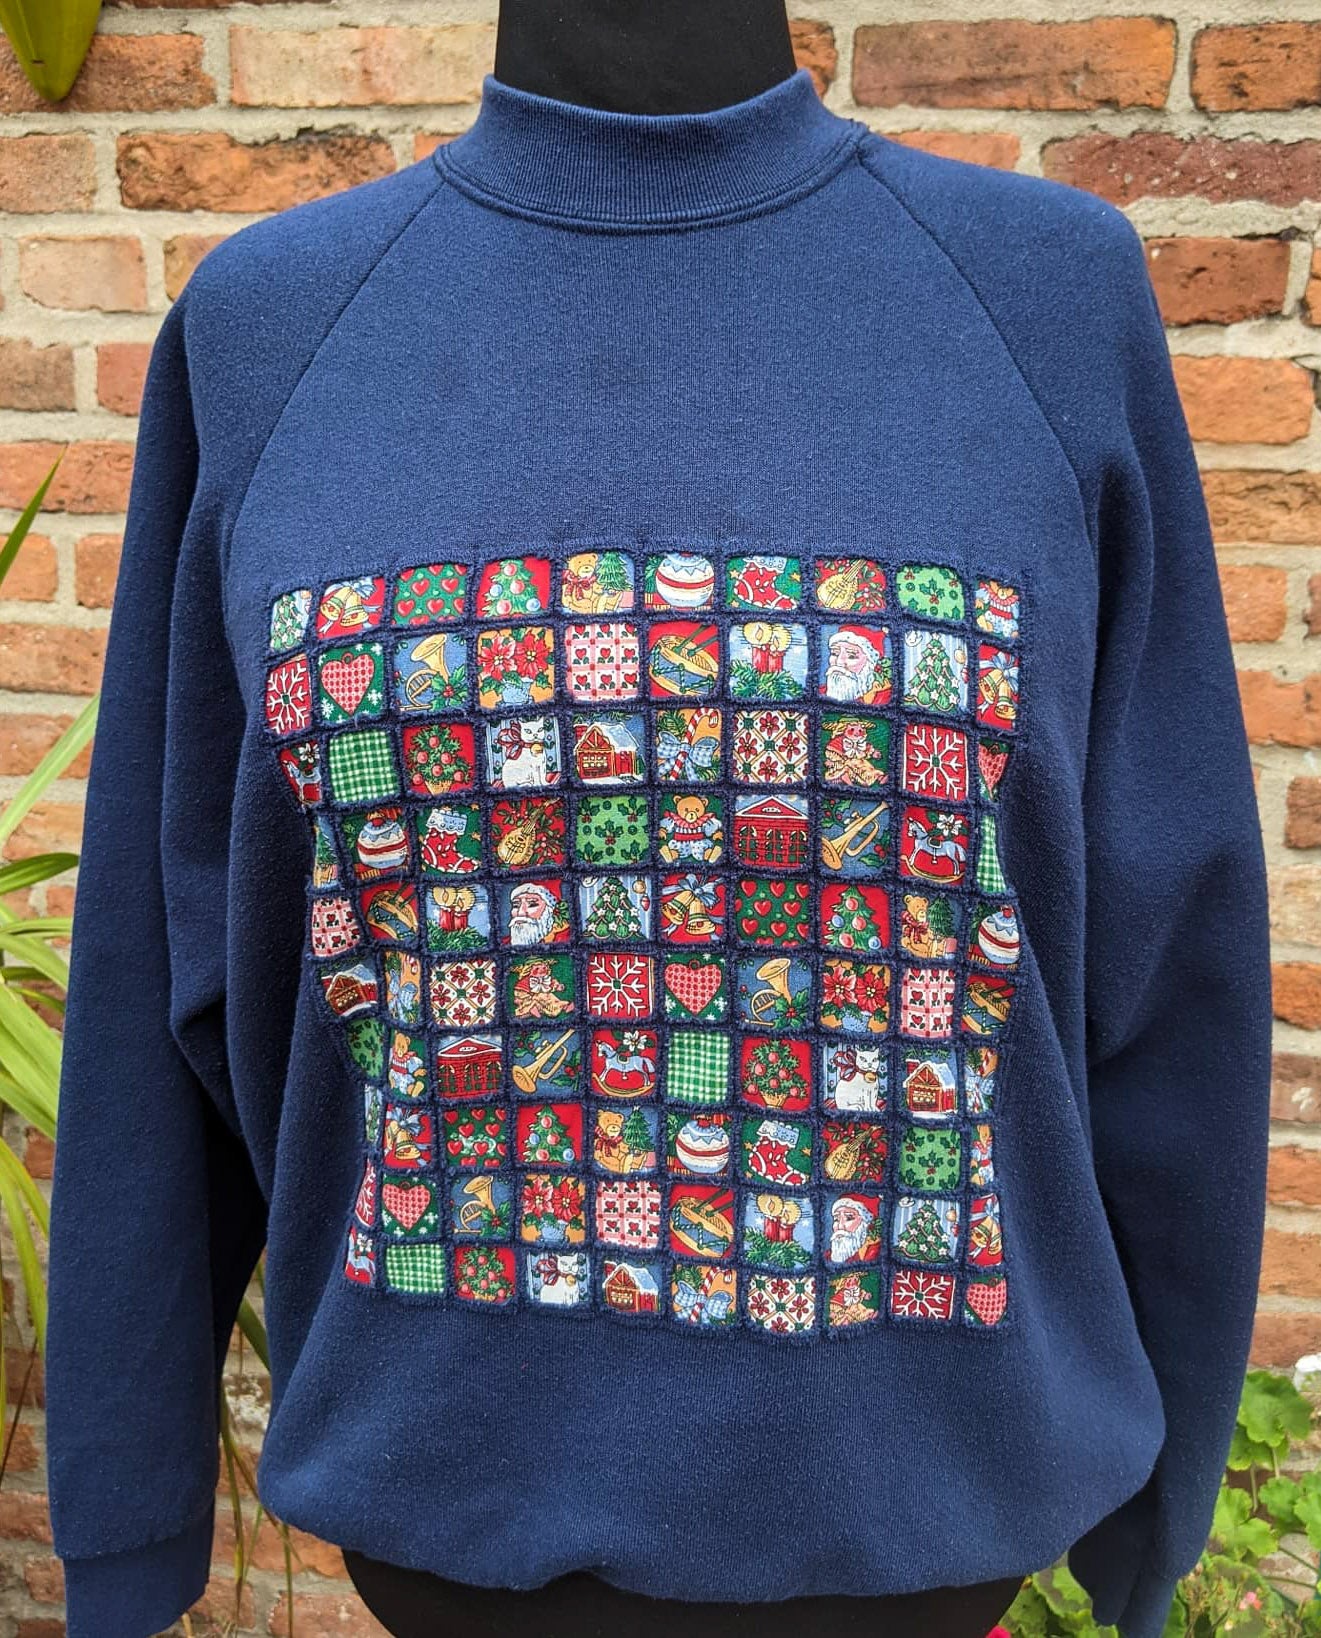 Kitsch Christmas sweatshirt size XL item 883